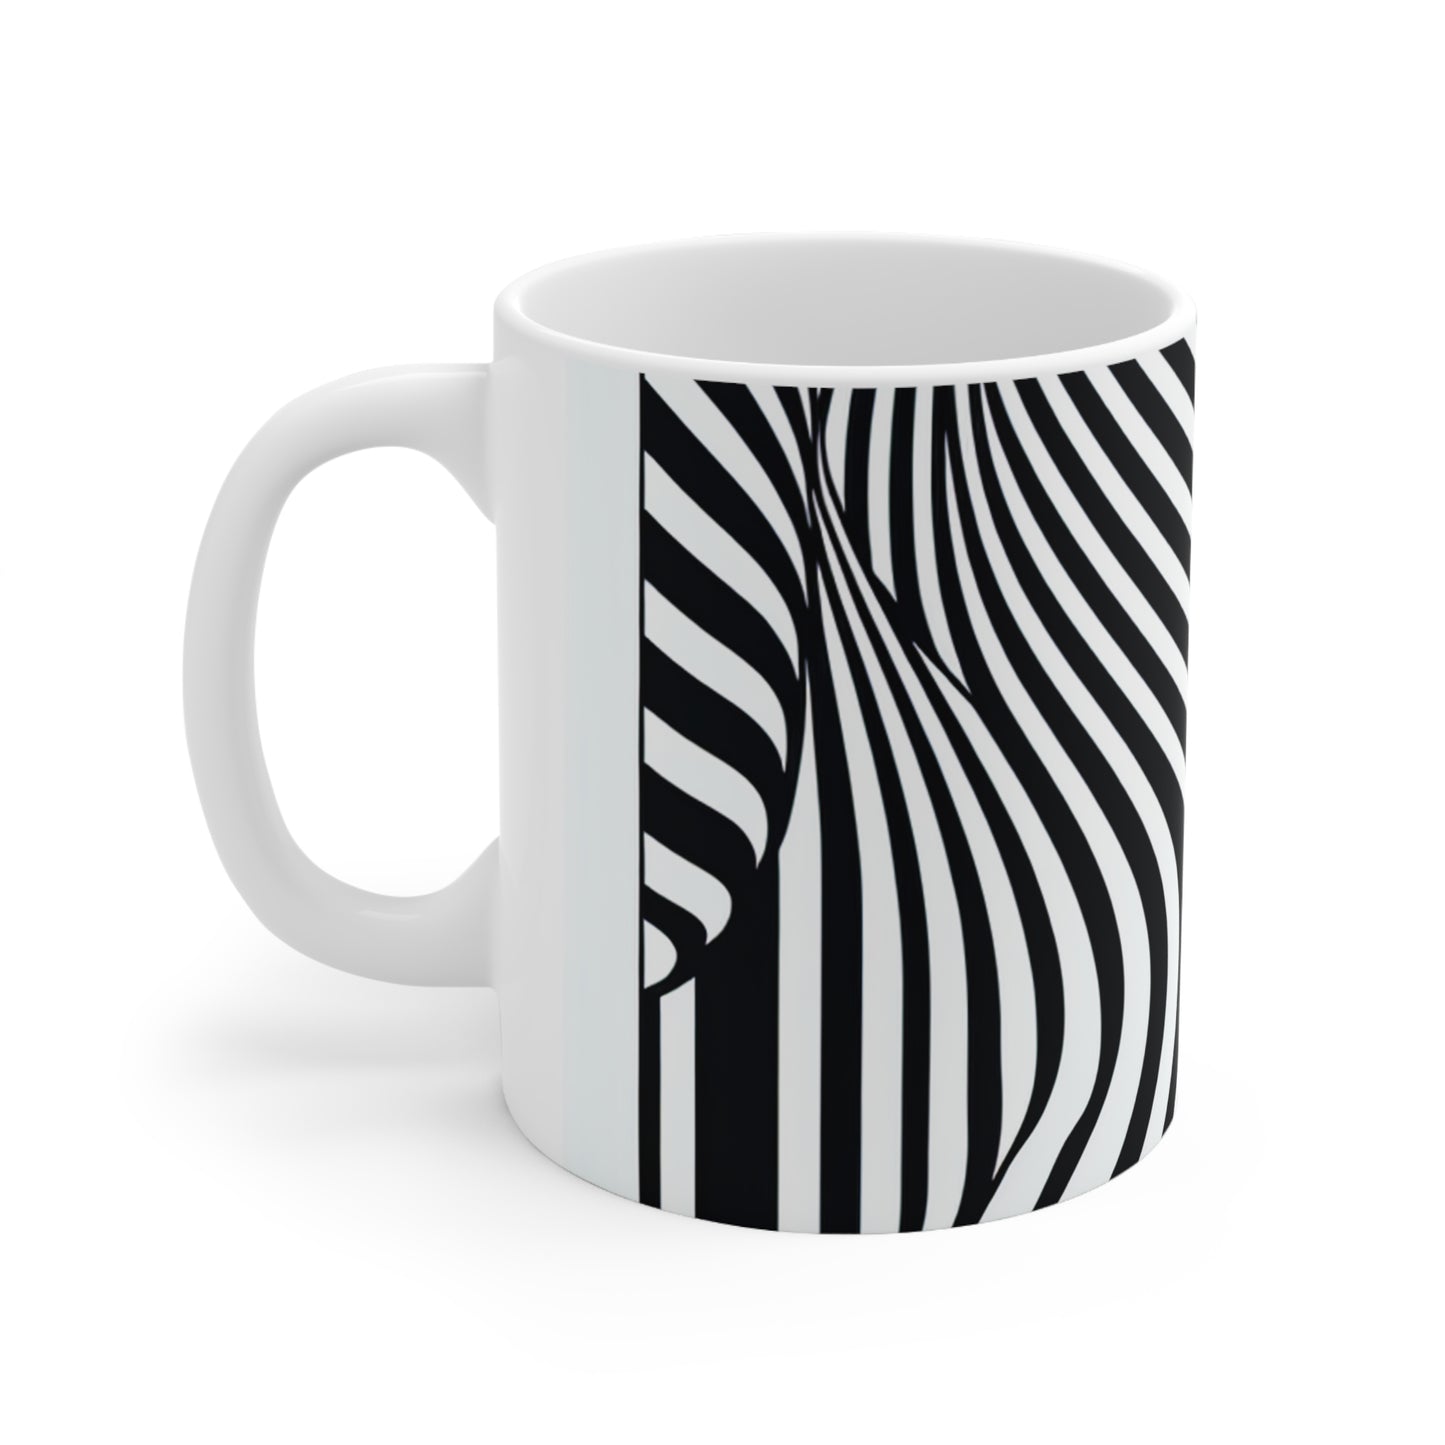 "Optical Illusion Wave" - The Alien Ceramic Mug 11oz Op Art Style